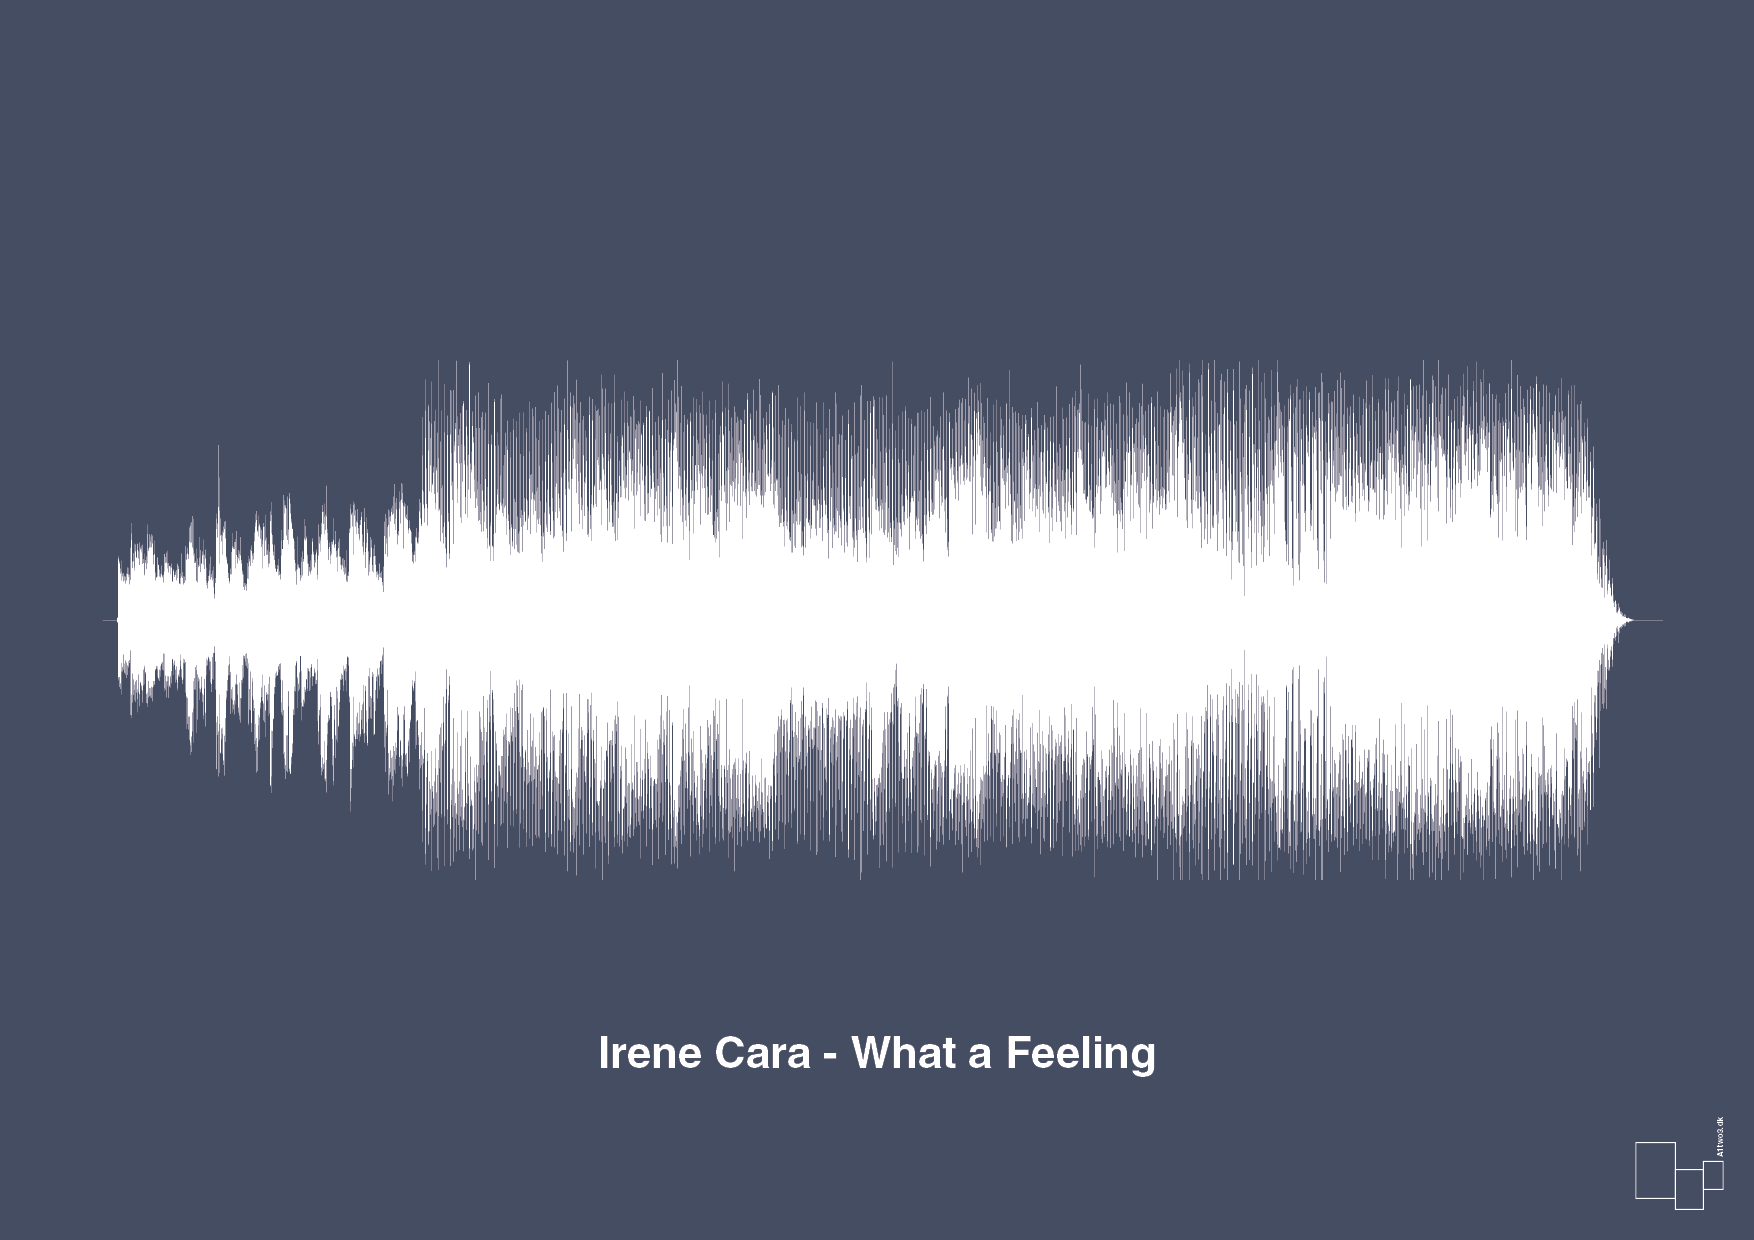 irene cara - what a feeling - Plakat med Musik i Petrol